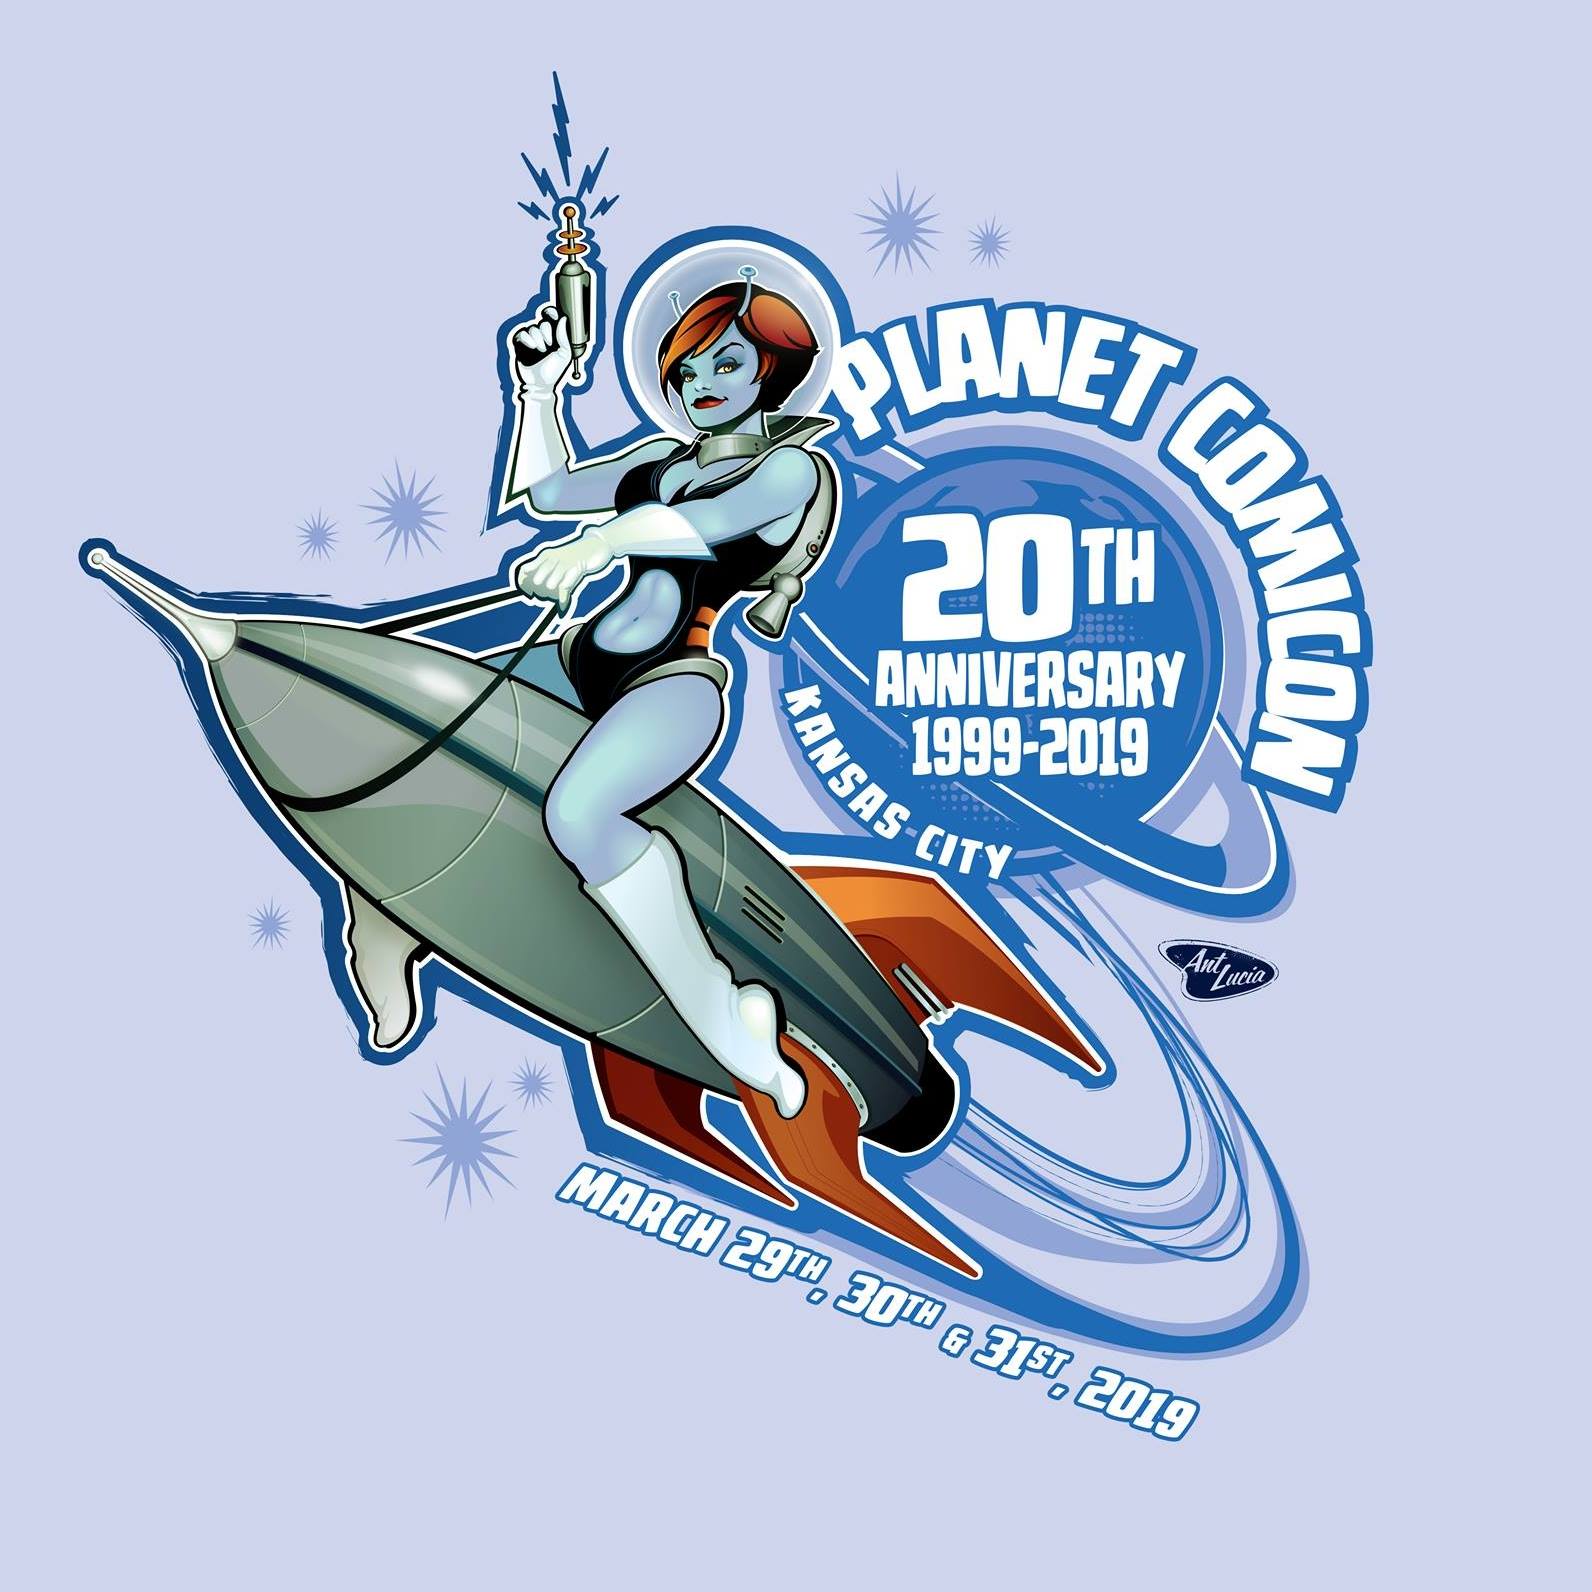 Planet Comicon taps Ant Lucia for 20th Anniversary logo